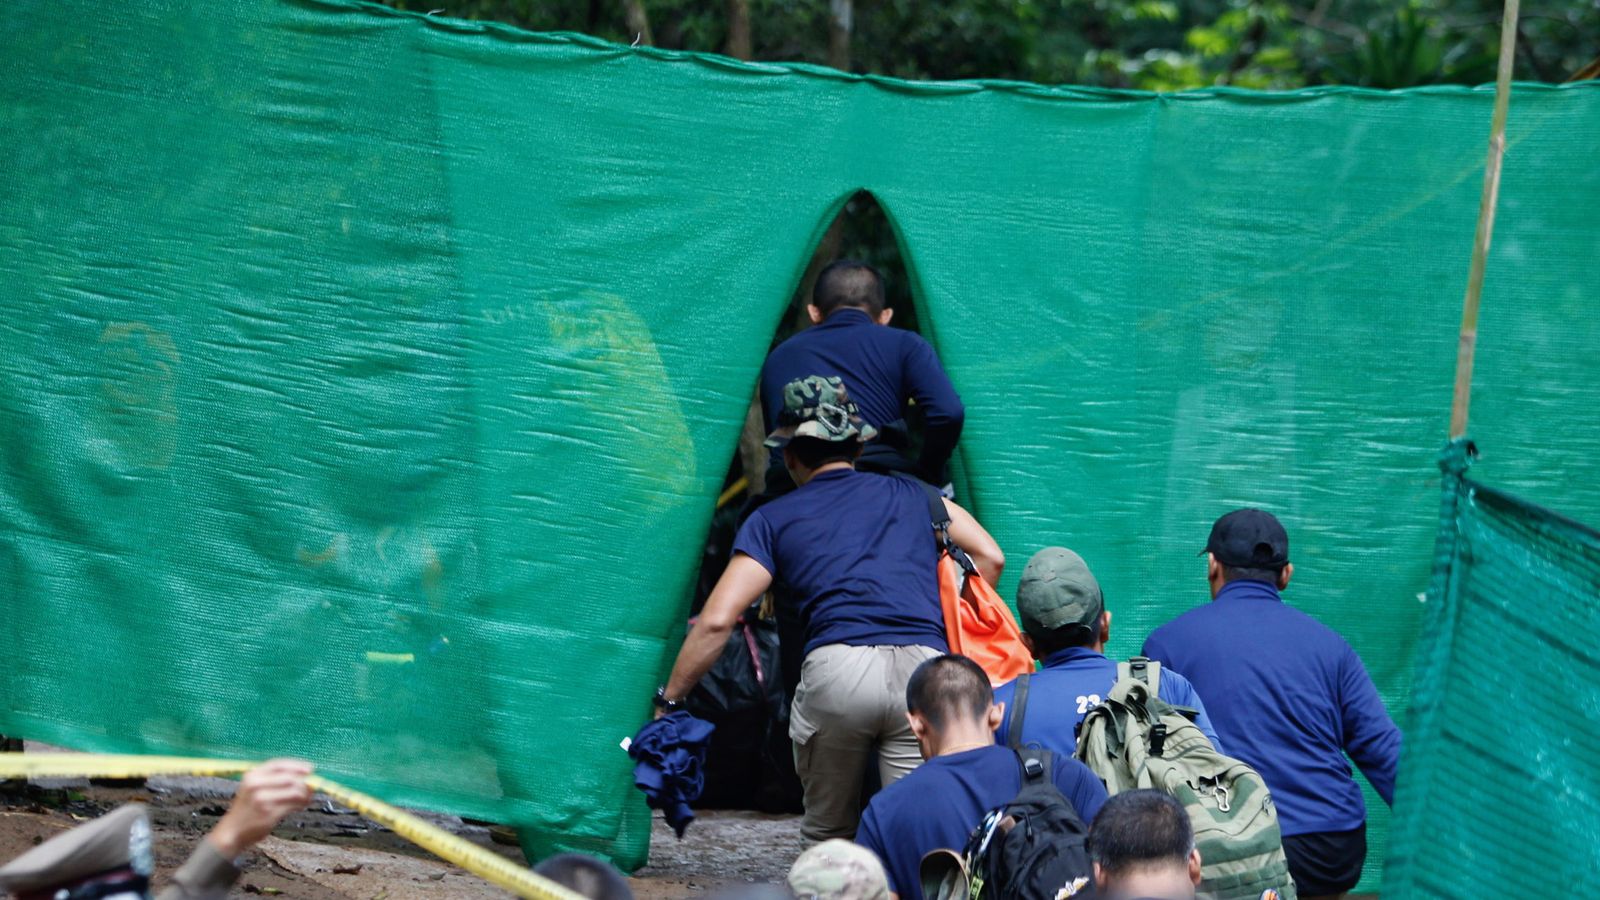 Foto: Personal militar entra en el área restringida de la cueva para iniciar el rescate. (Reuters)